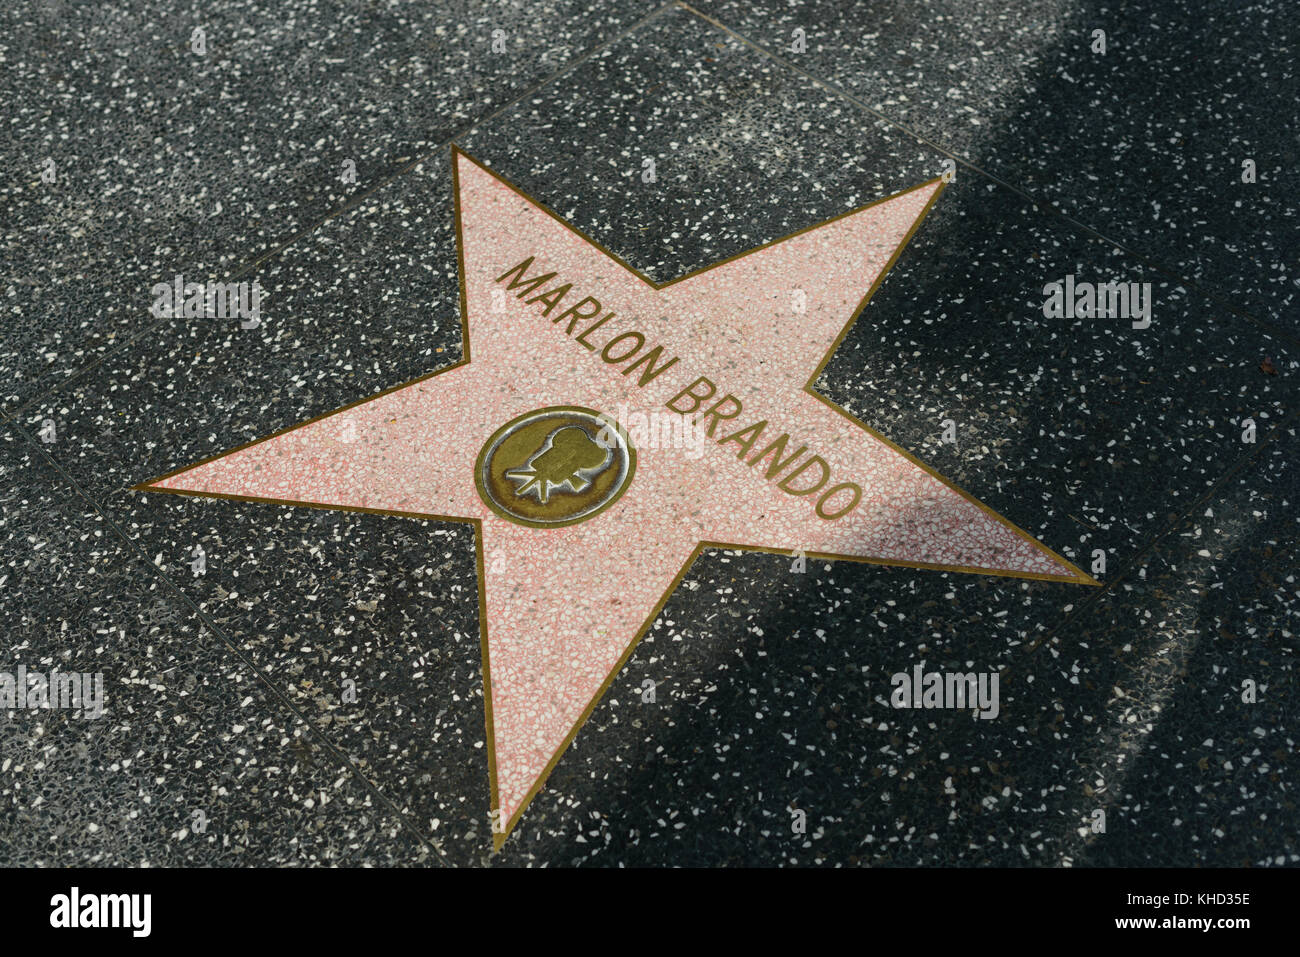 HOLLYWOOD, CA - DECEMBER 06: Marlon Brando star on the Hollywood Walk of Fame in Hollywood, California on Dec. 6, 2016. Stock Photo